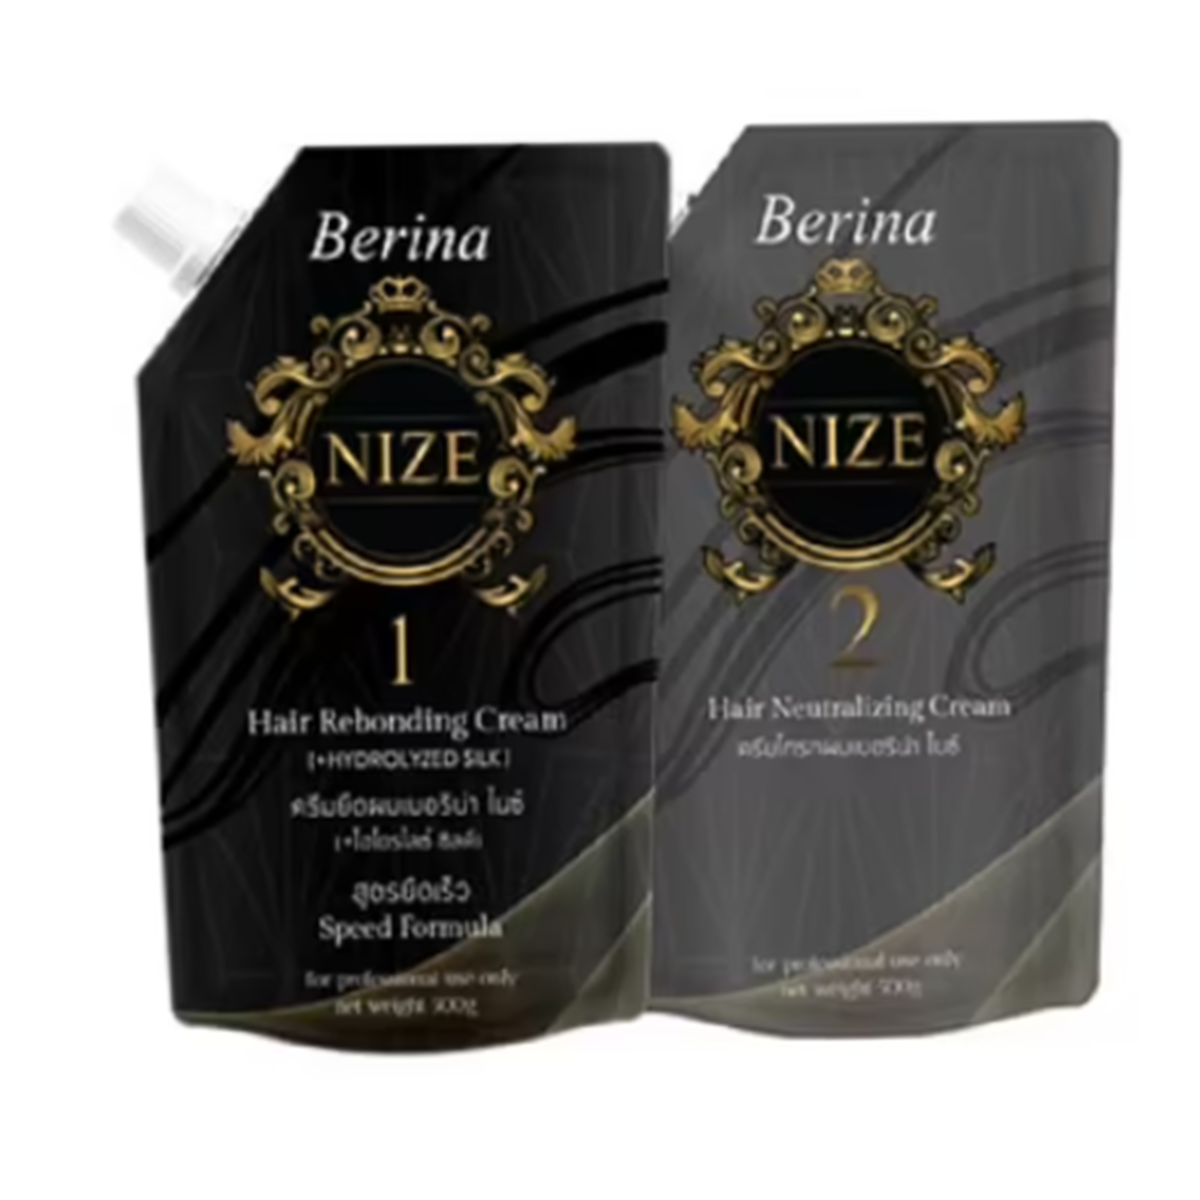 Berina Nize Rebonding Kit - Transform Your Hair at Home